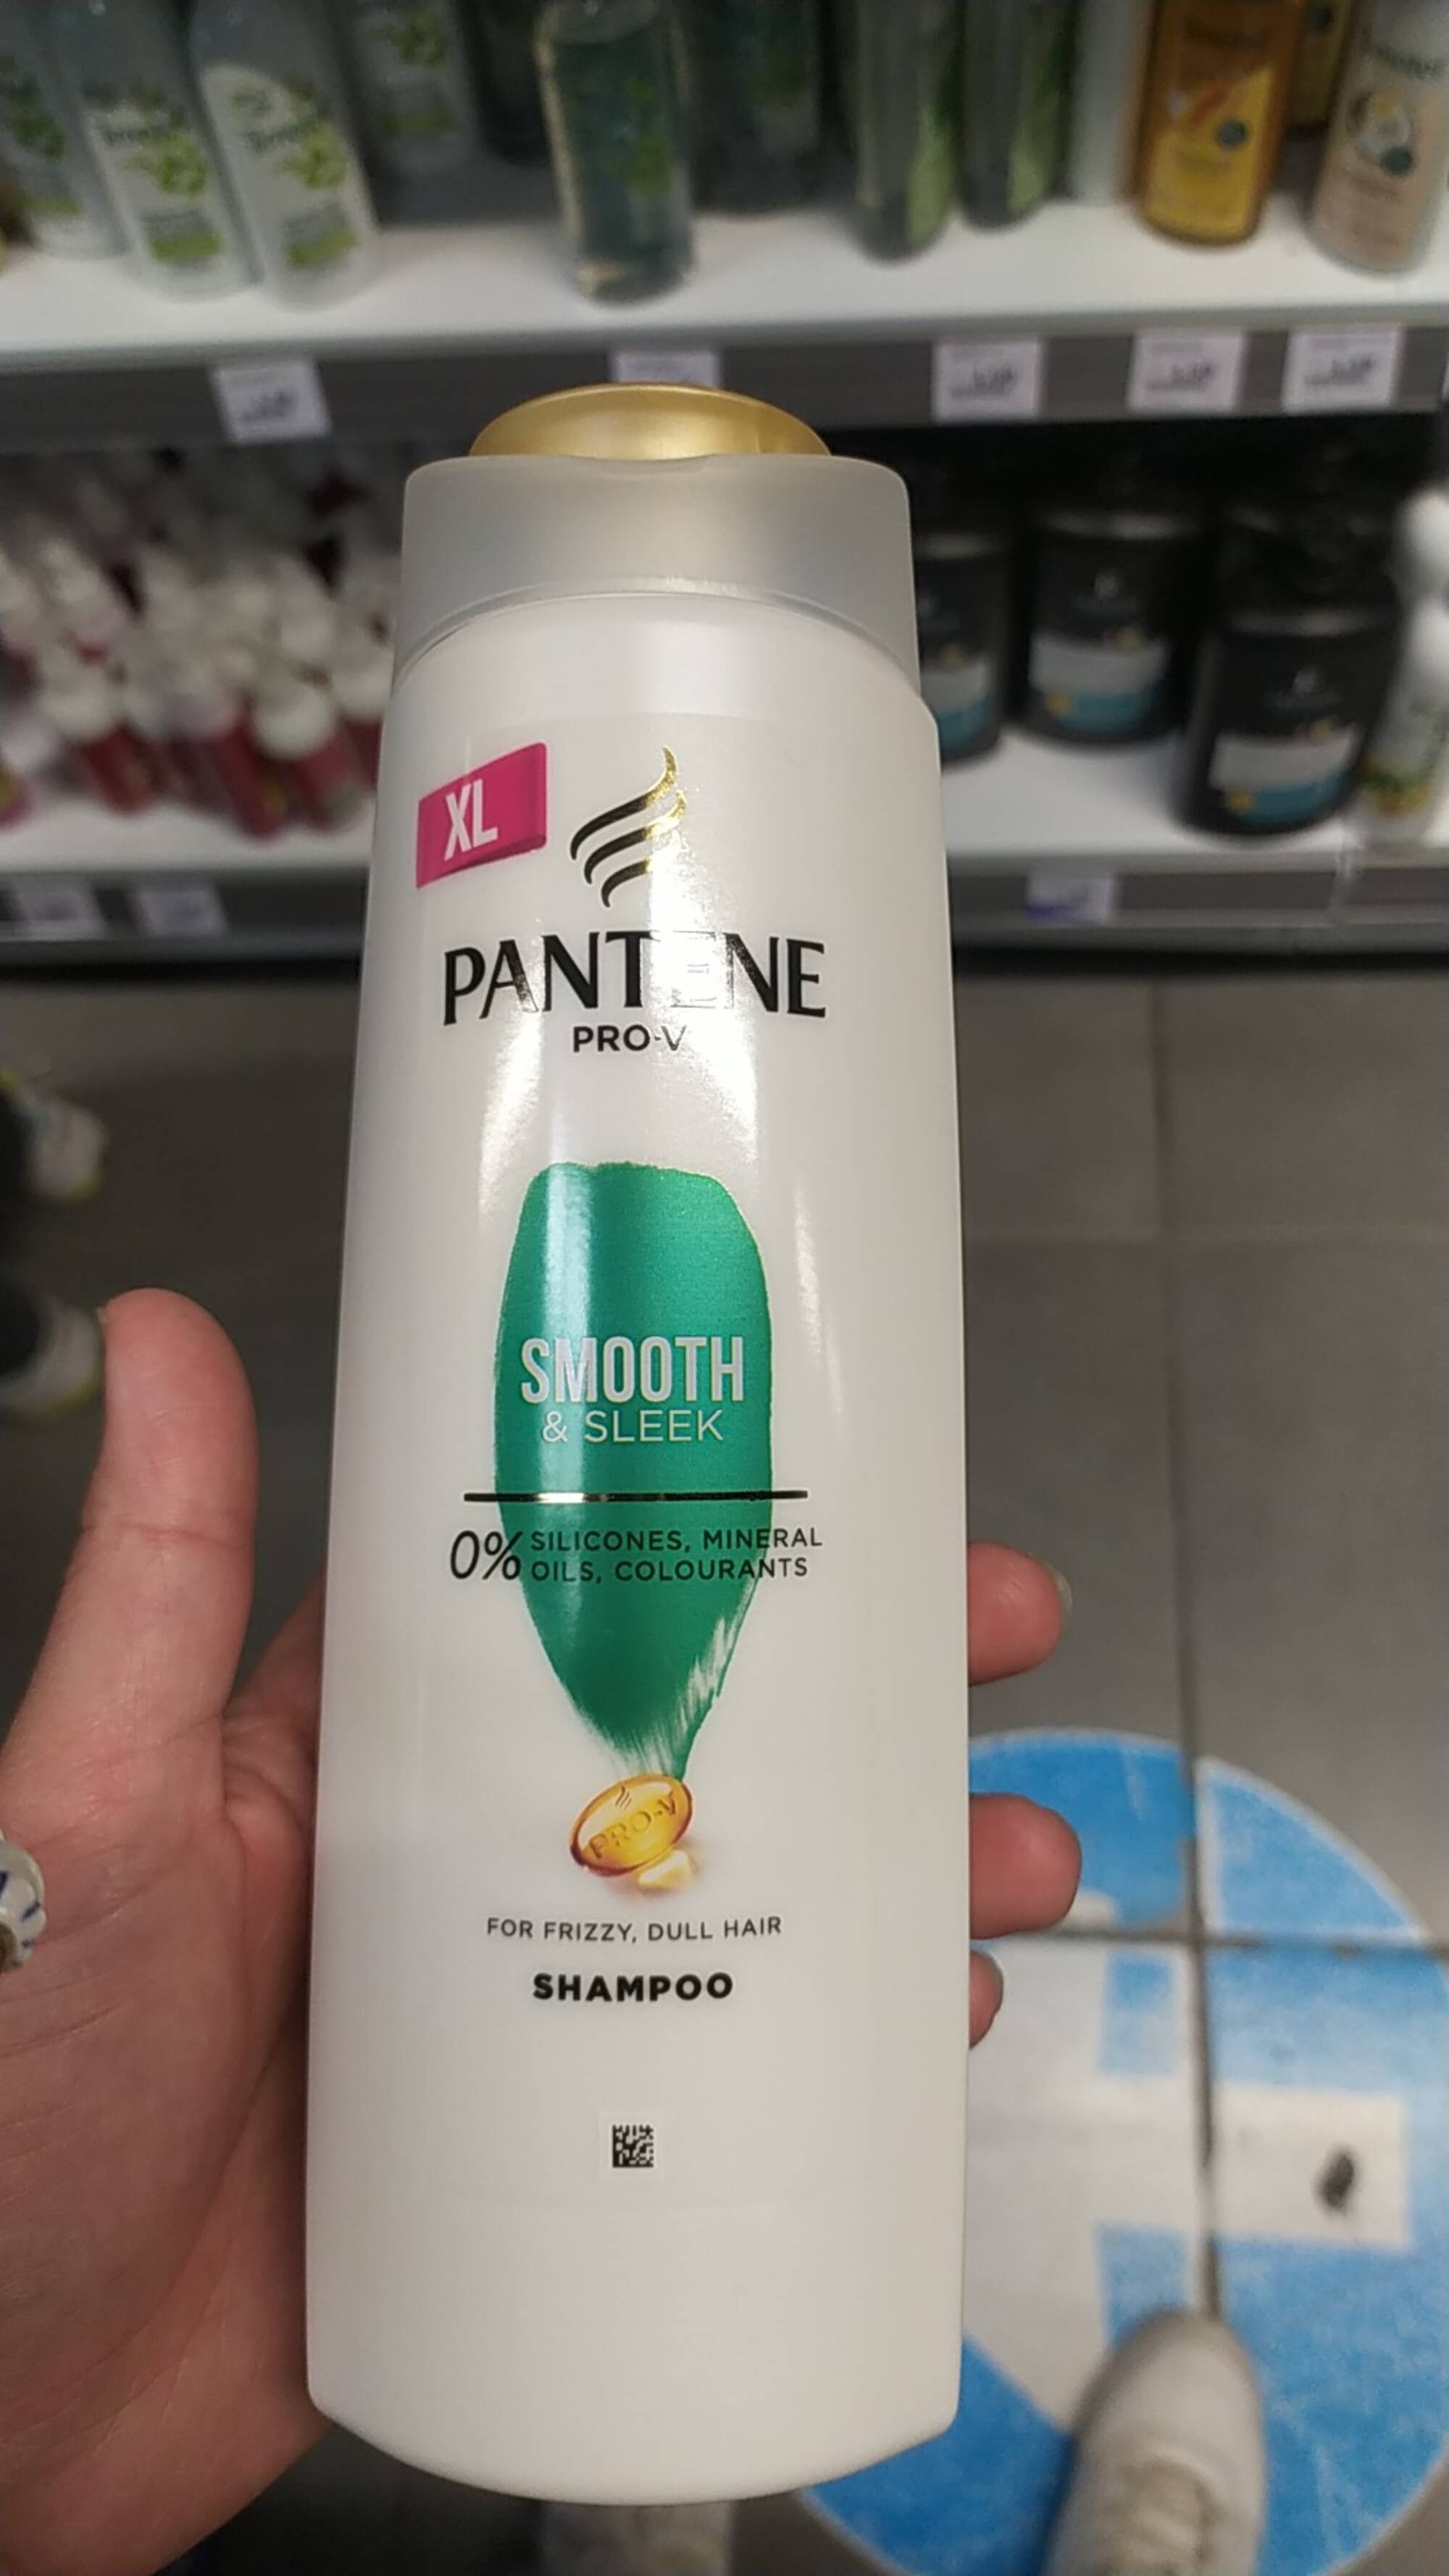 PANTENE PRO-V - Smooth & sleek - Shampoo